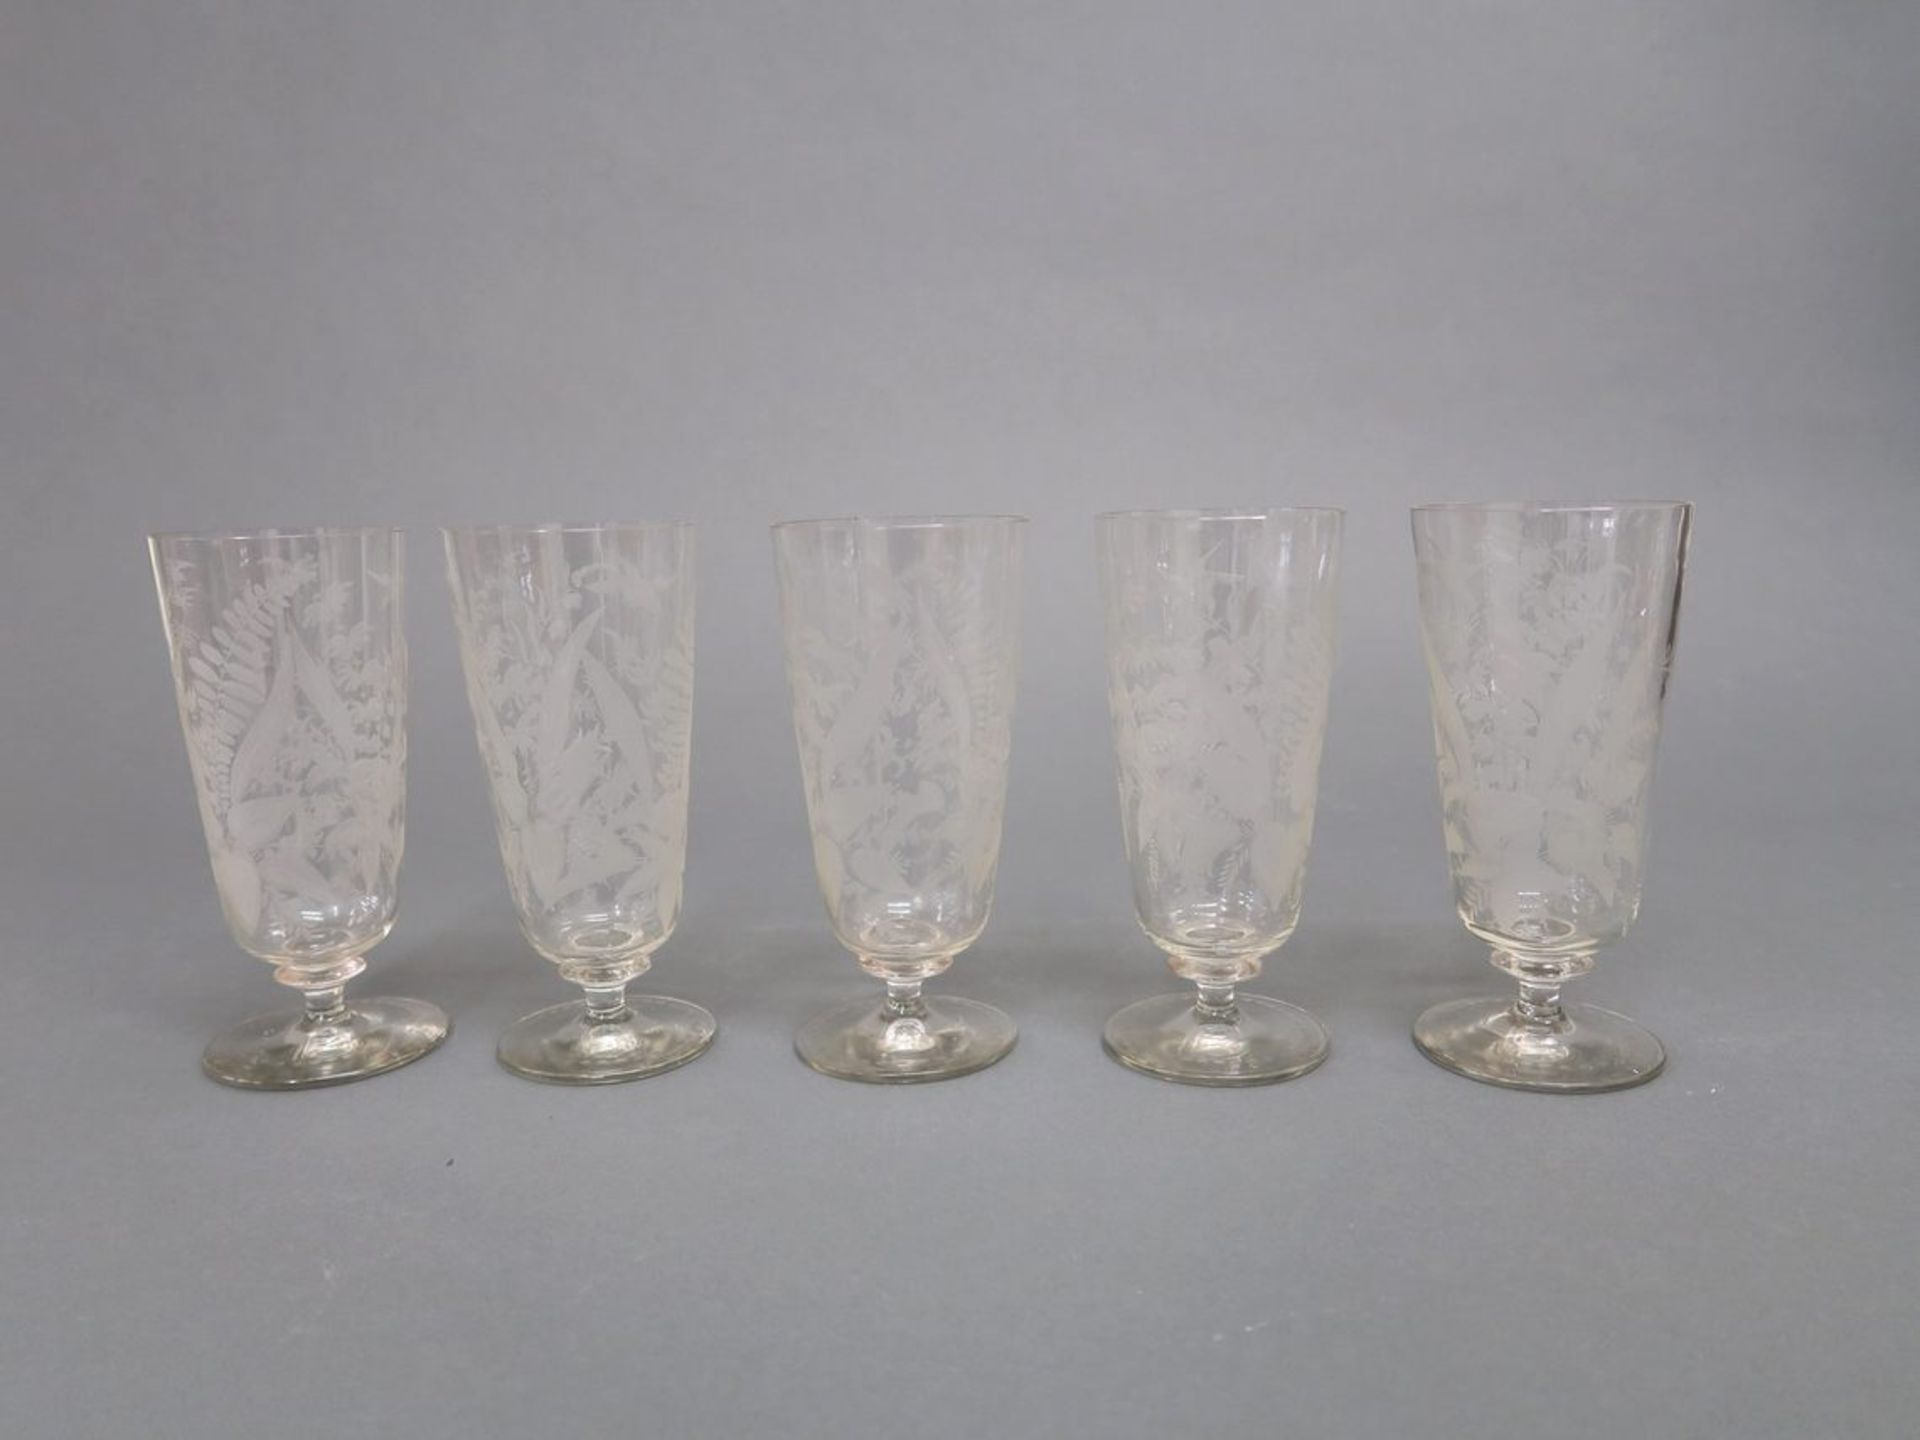 Fünf KelchgläserFarbloses, transparentes Glas, mundgeblasen. Scheibenförmiger Stand, nodierter